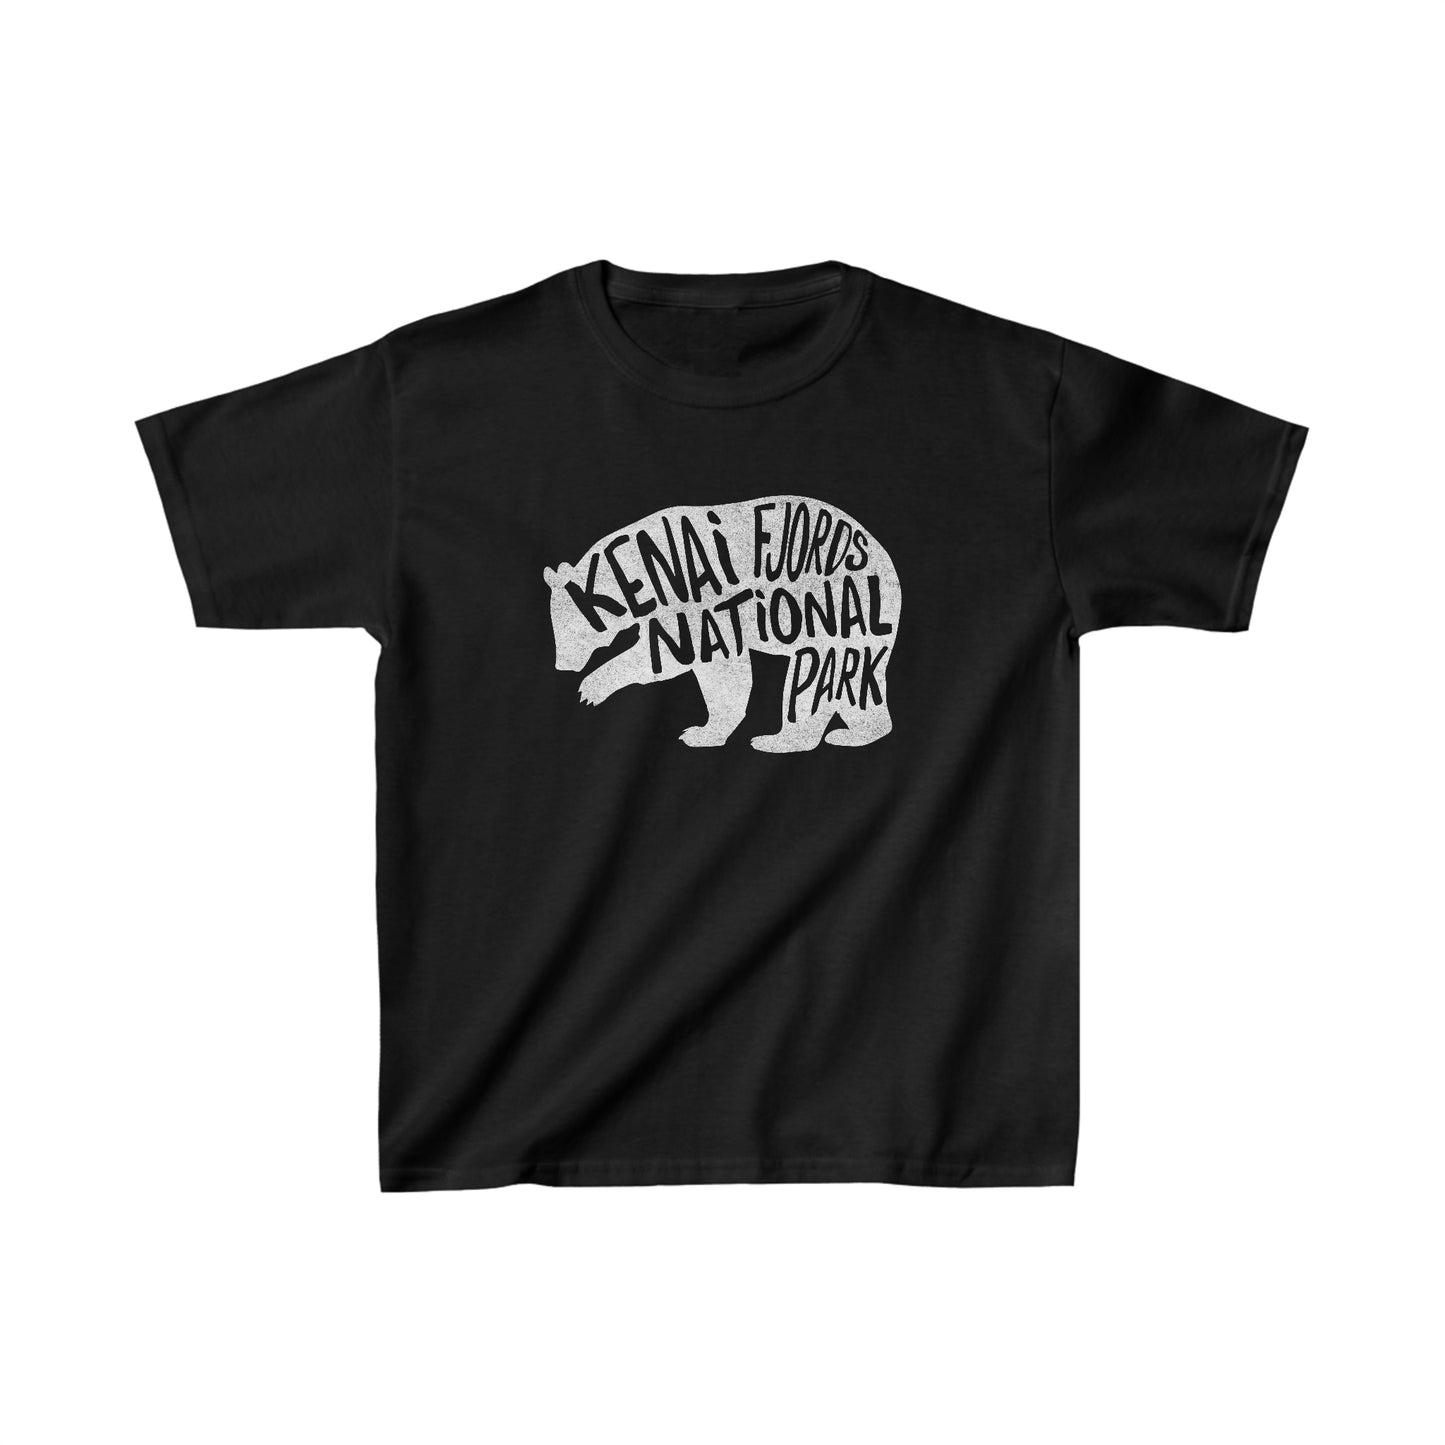 Kenai Fjords National Park Child T-Shirt - Grizzly Bear Chunky Text